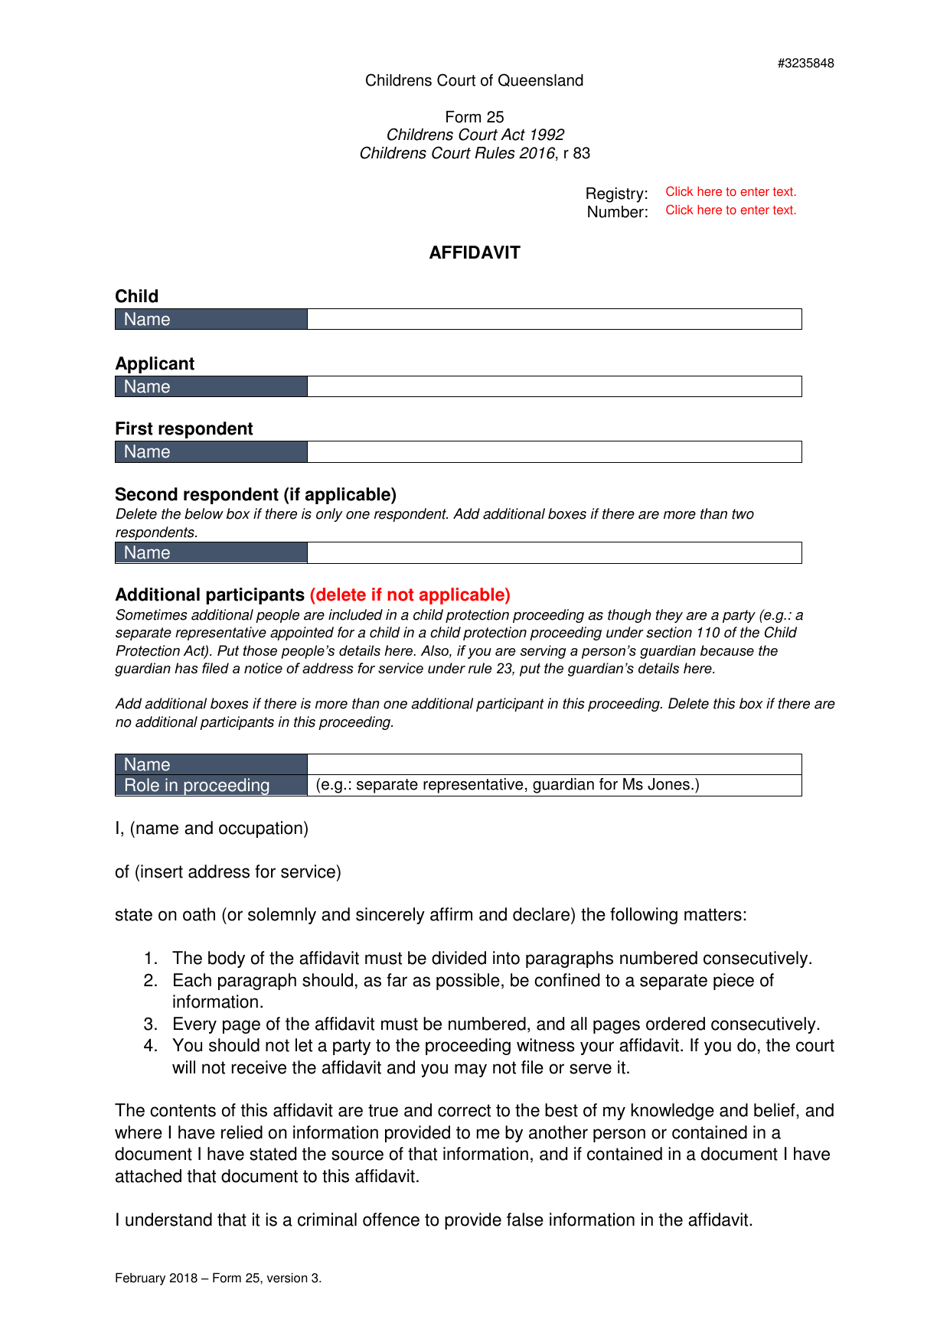 Form 25 Affidavit - Queensland, Australia, Page 1